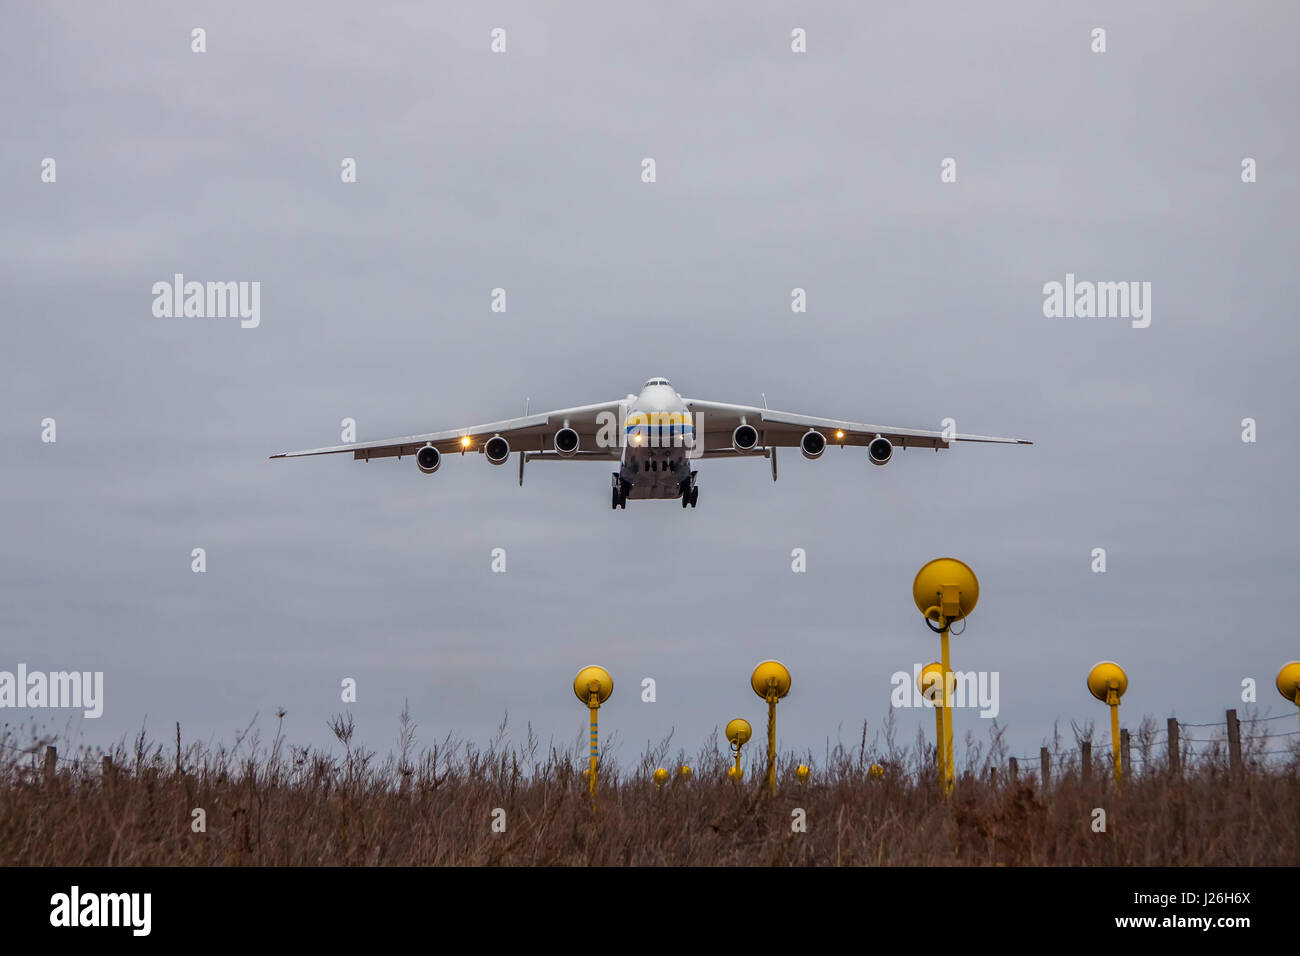 Kiev Region, Ukraine - January 8, 2012: Antonov An-225 Mriya cargo plane is on finallanding at dusk Stock Photo